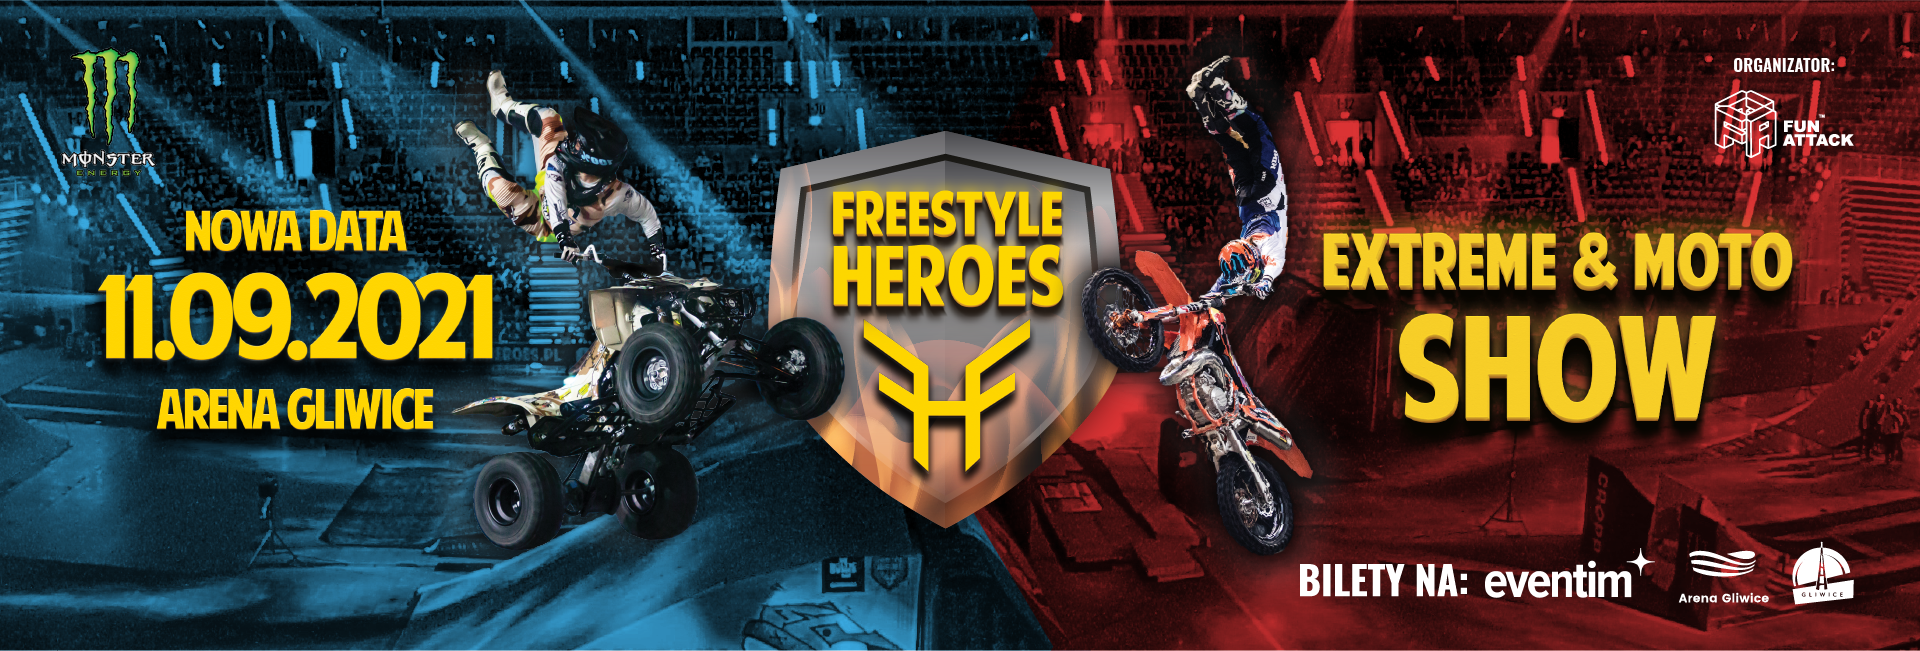 Freestyle Heroes 2021 – Extreme & Moto Show NOWA DATA